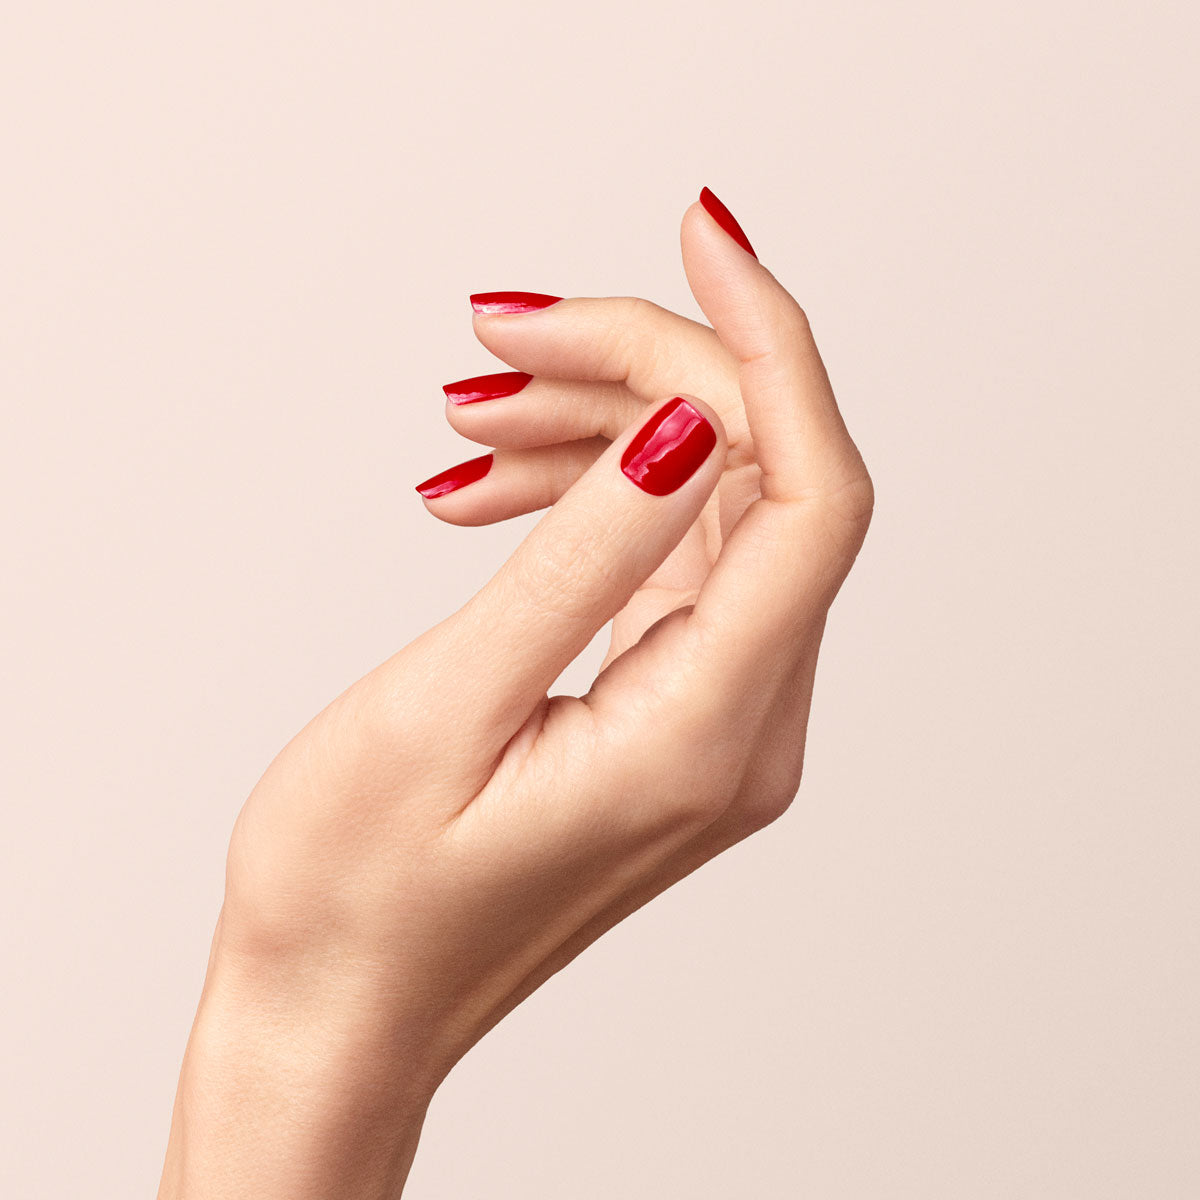 Get Ultra HD Nails with MI Fashion Shine Nail Polish - Shop Now!